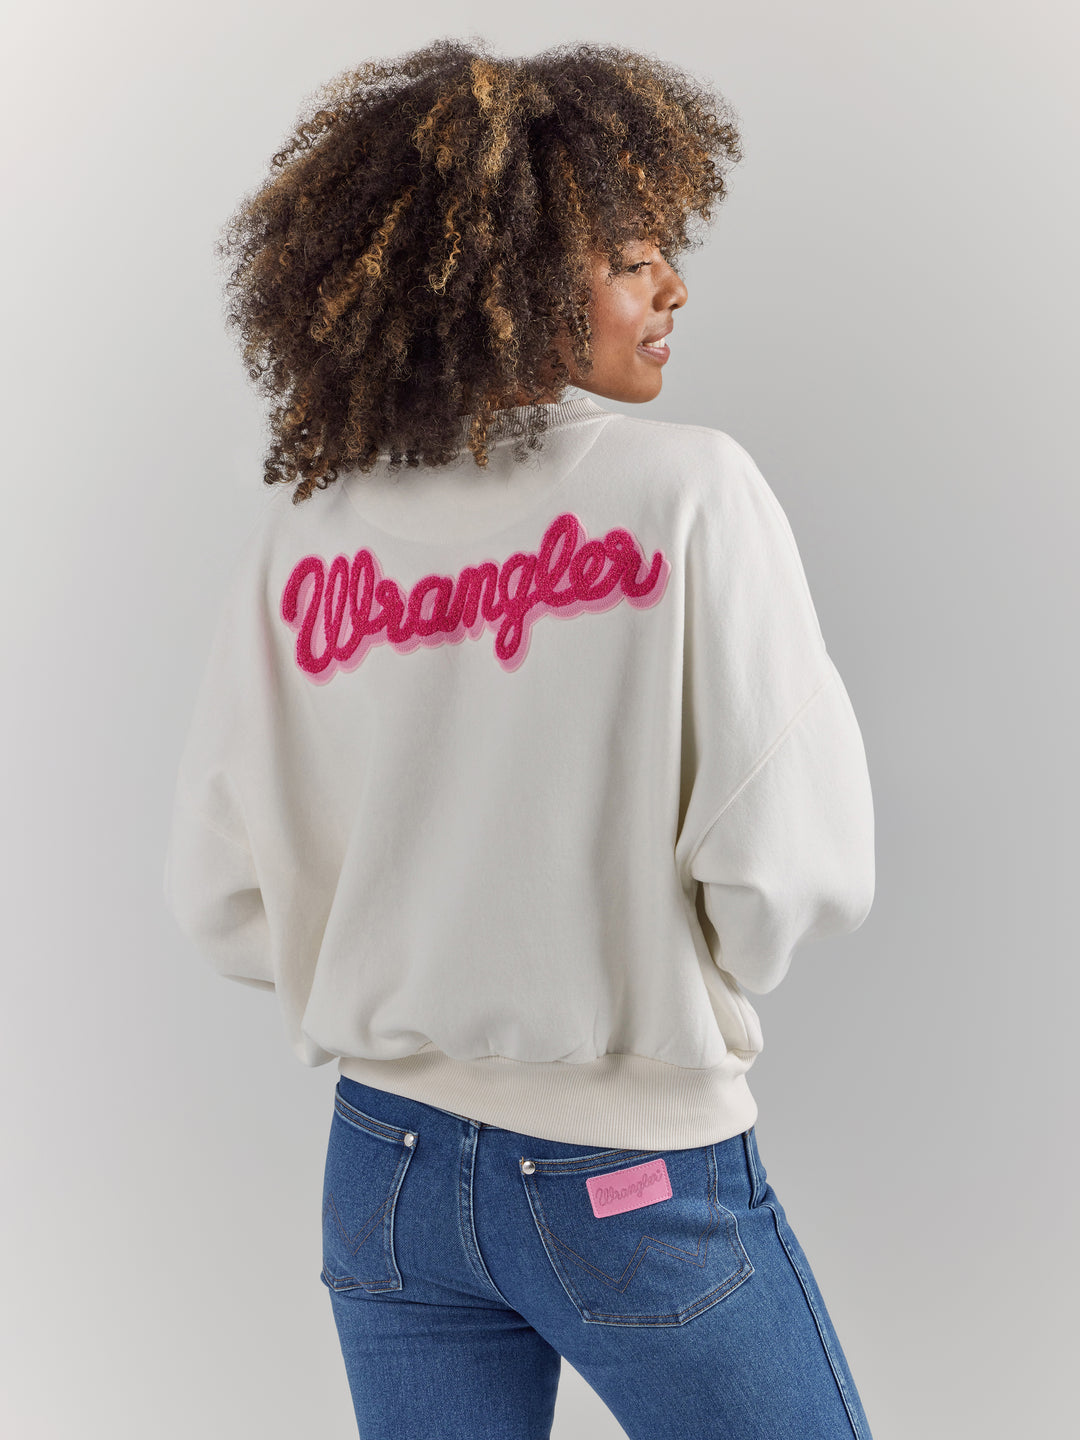 Wrangler Women's Barbie Relaxed Logo Sweatshirt